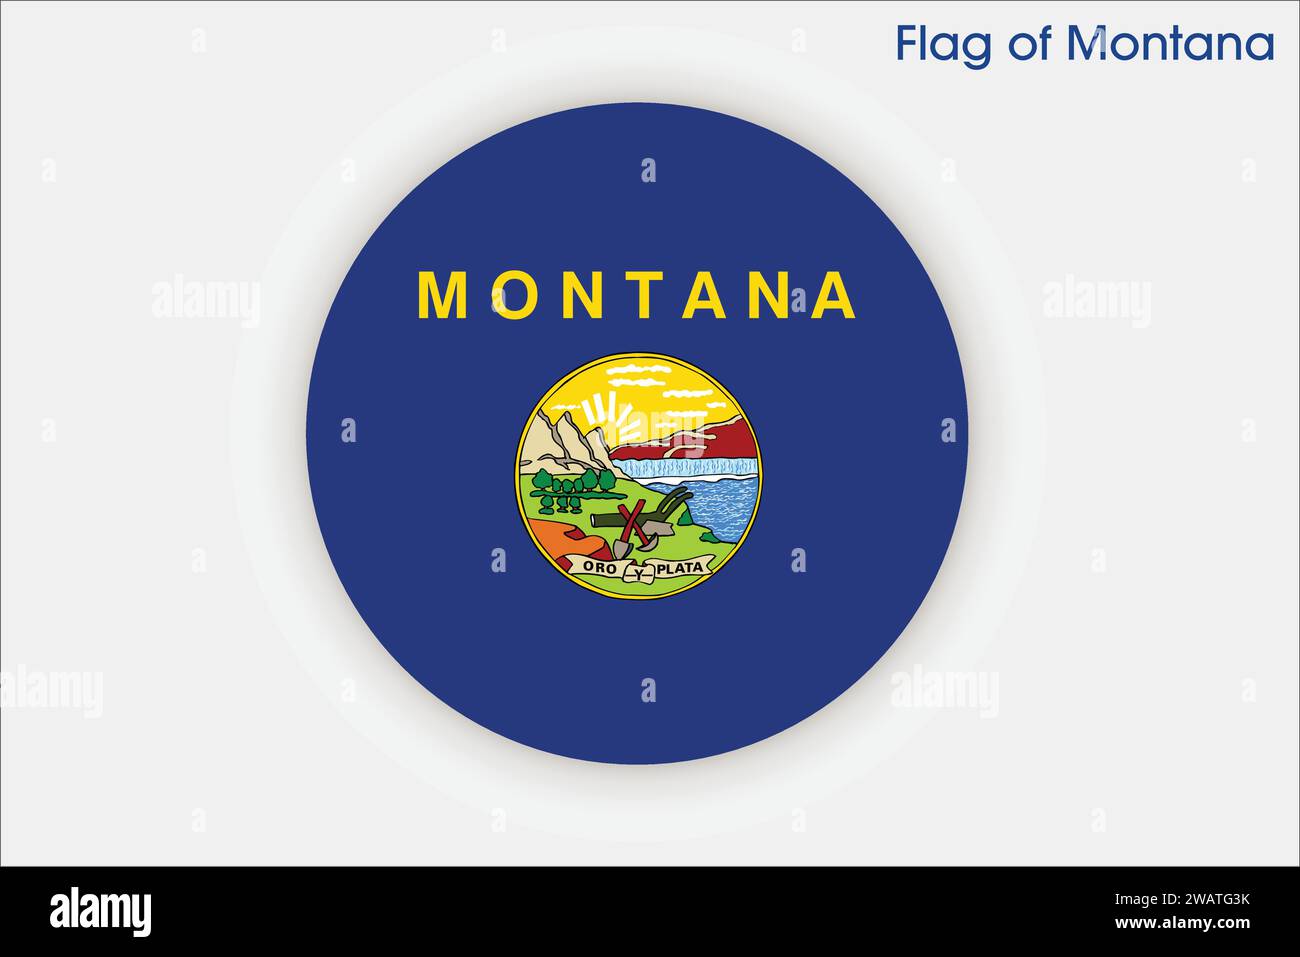 Detailreiche Flagge von Montana. Nationalflagge von Montana, Nationalflagge von Montana. Flagge des Bundesstaates Montana. USA. Amerika. Stock Vektor